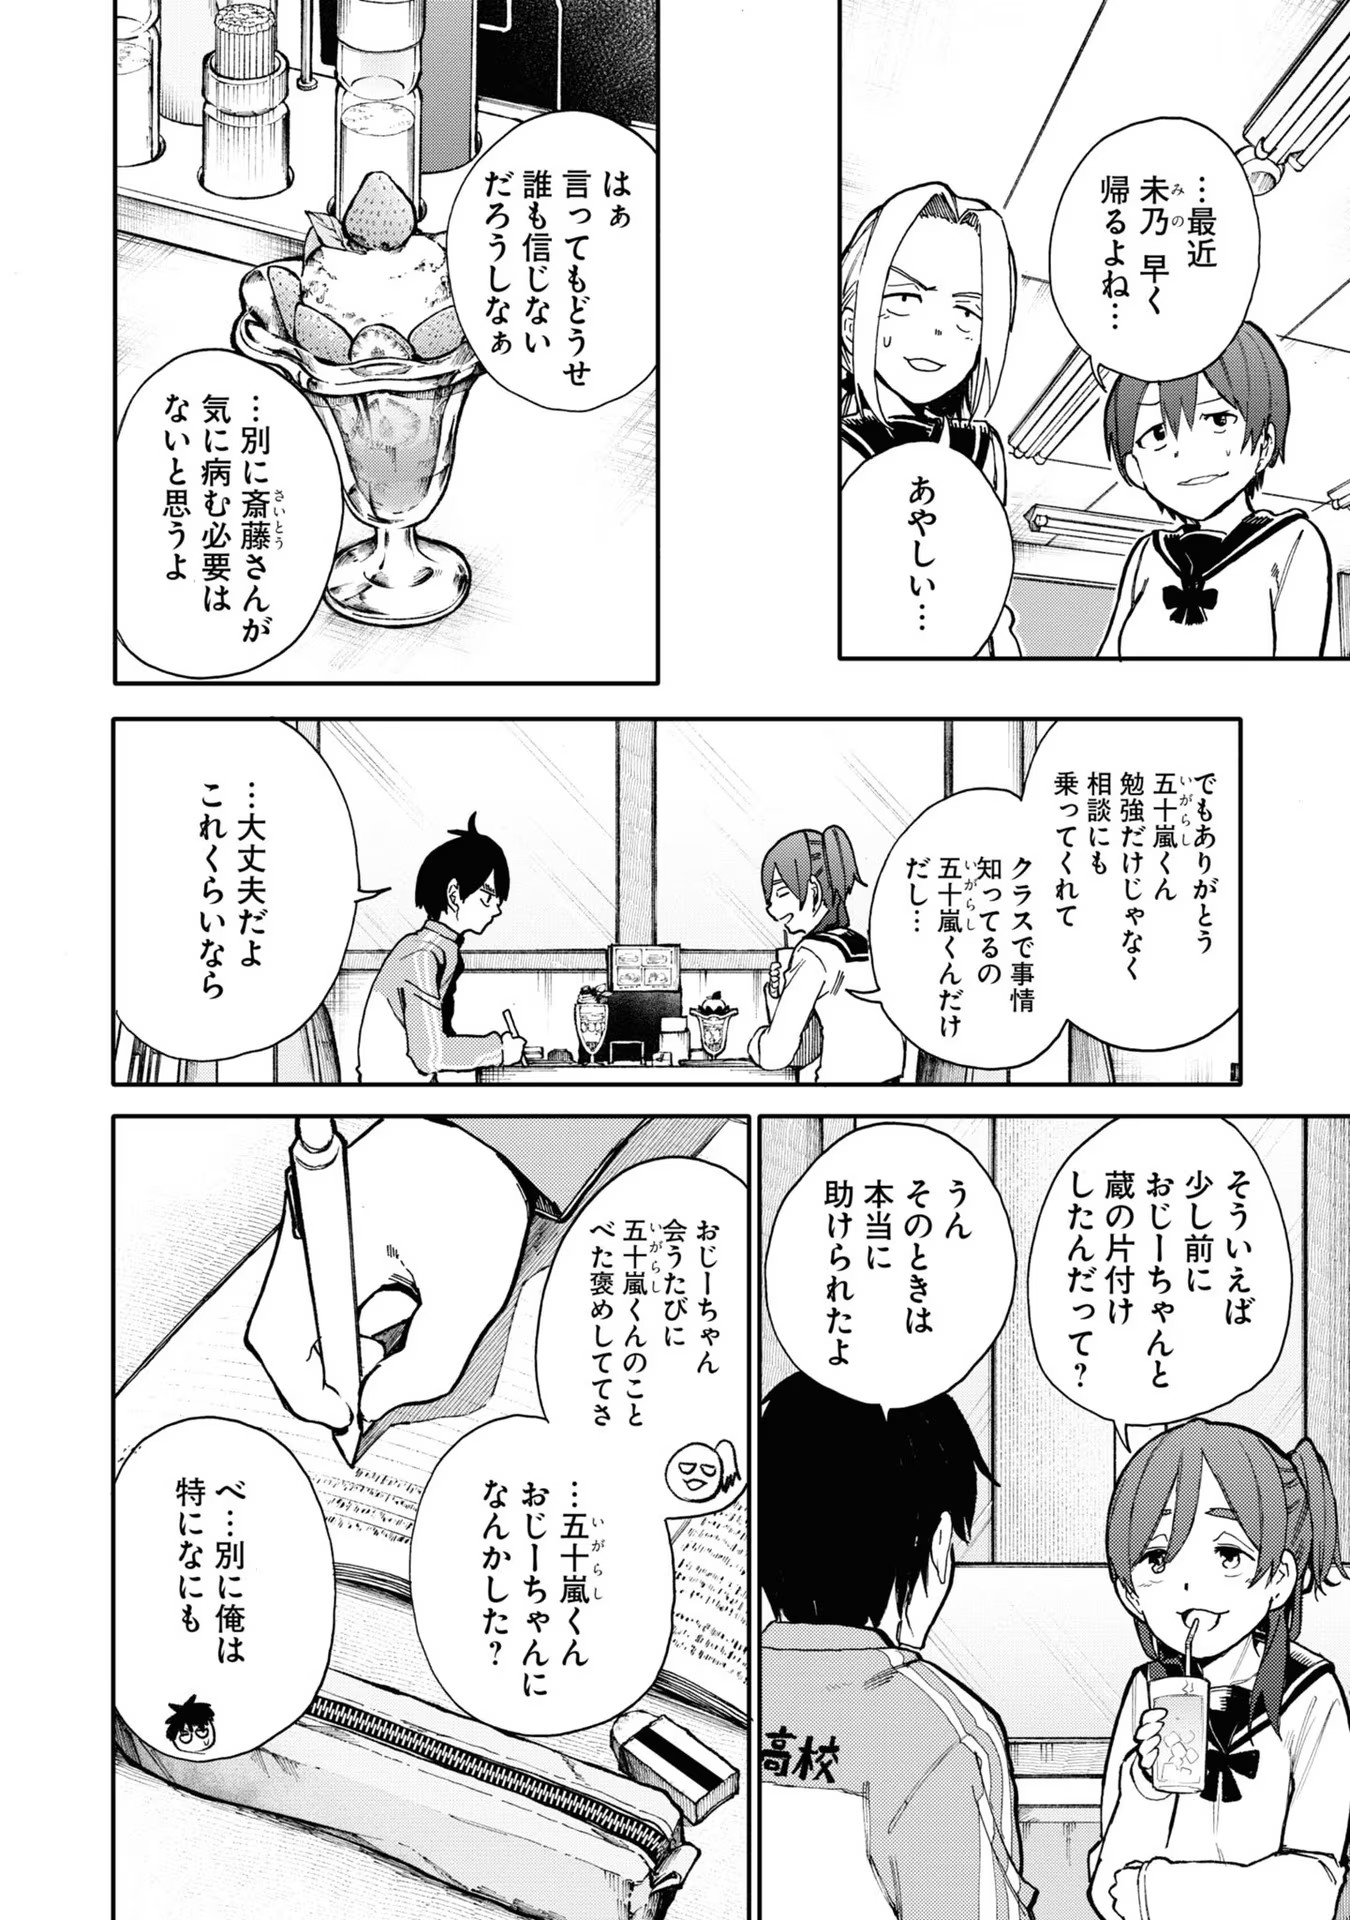 Ojii-san to Obaa-san ga Wakigaetta Hanashi - Chapter 66 - Page 2